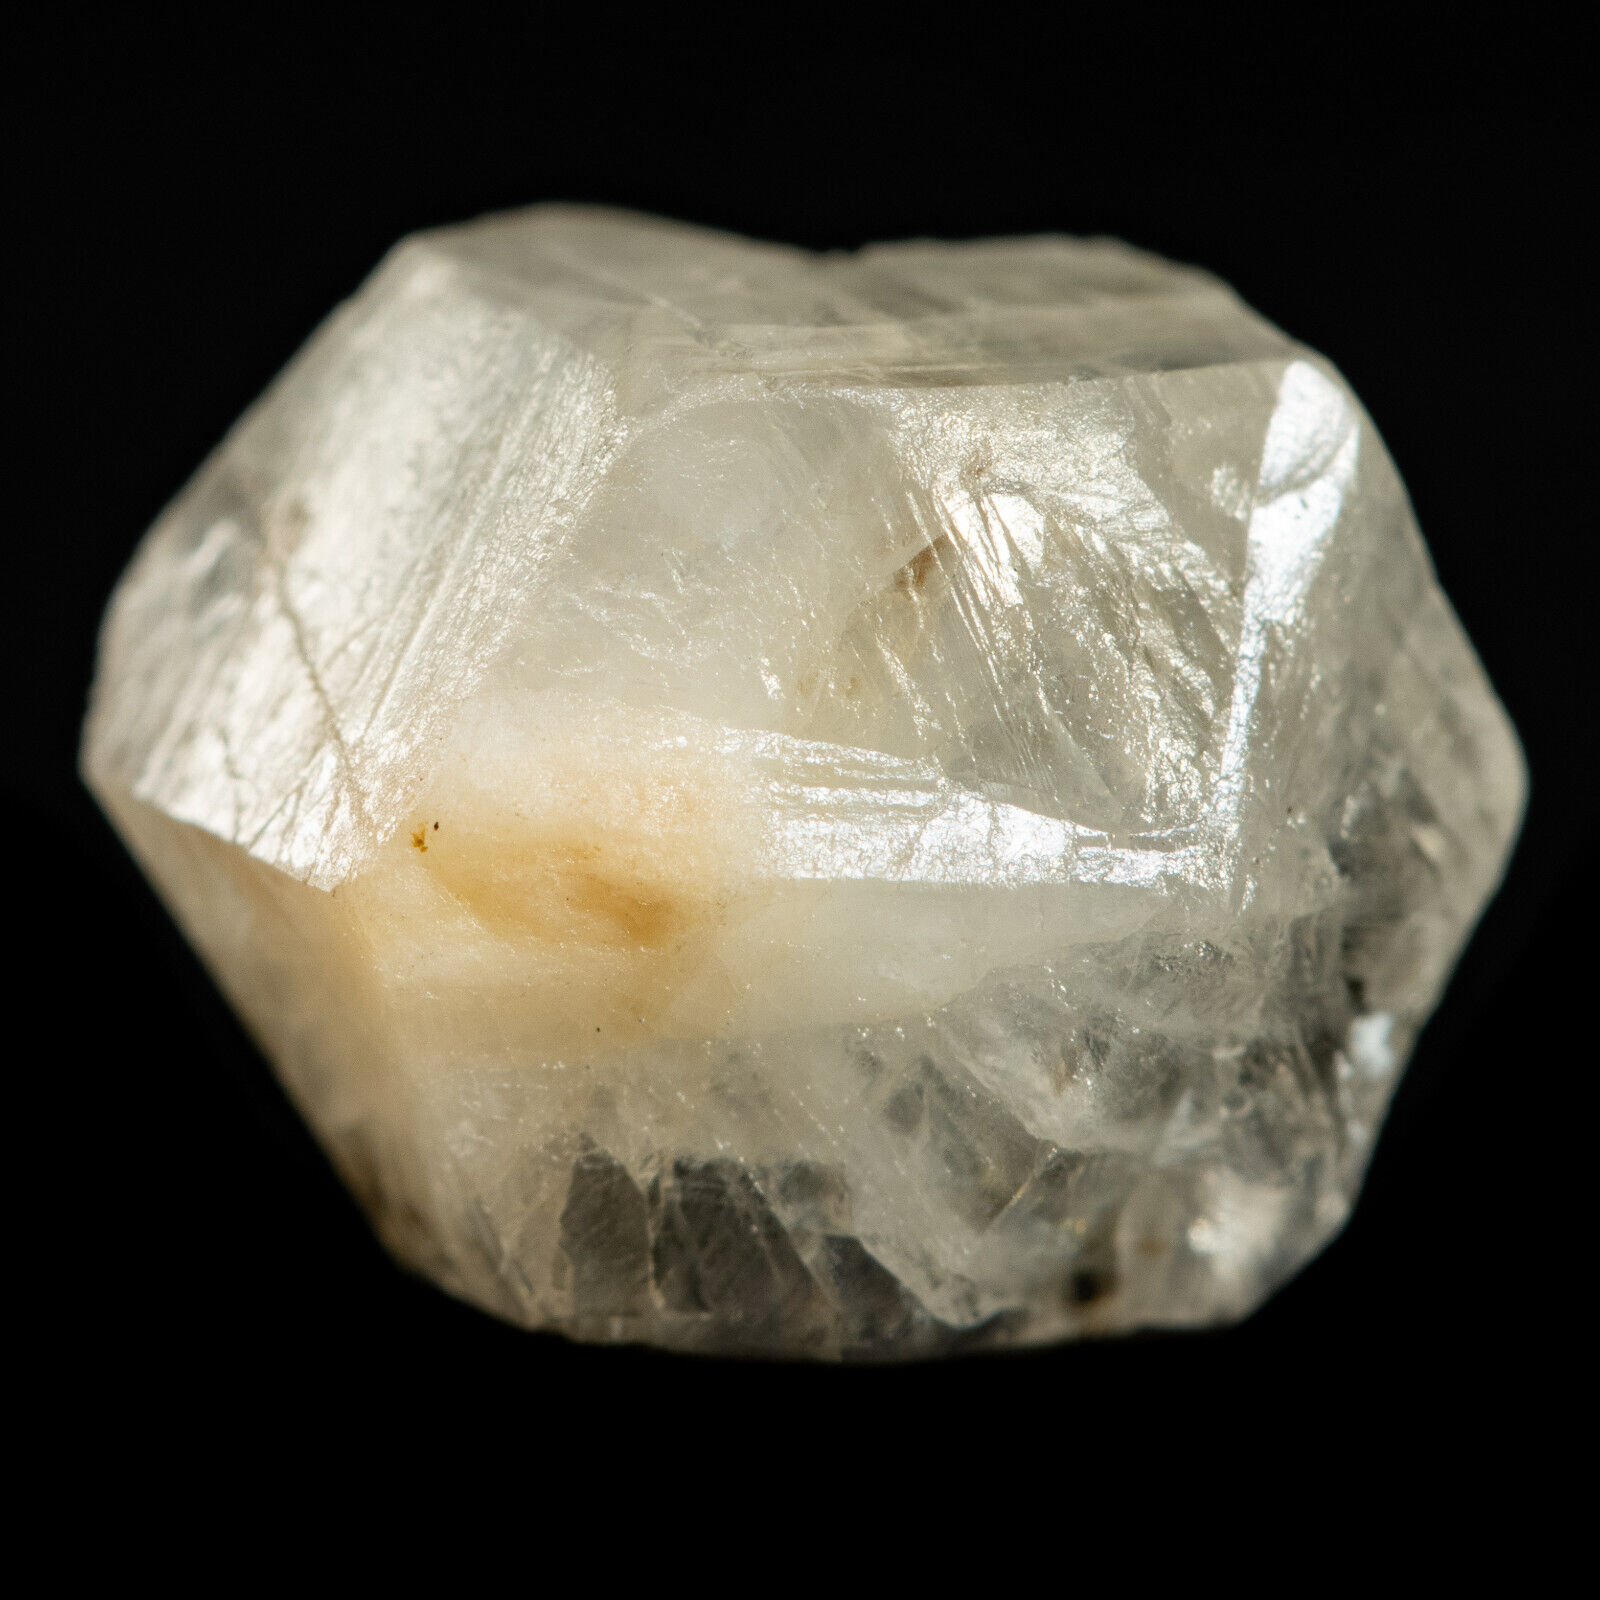 Phenakite crystal from Type locality. Izumrudnye Kopi Ural, Russia.